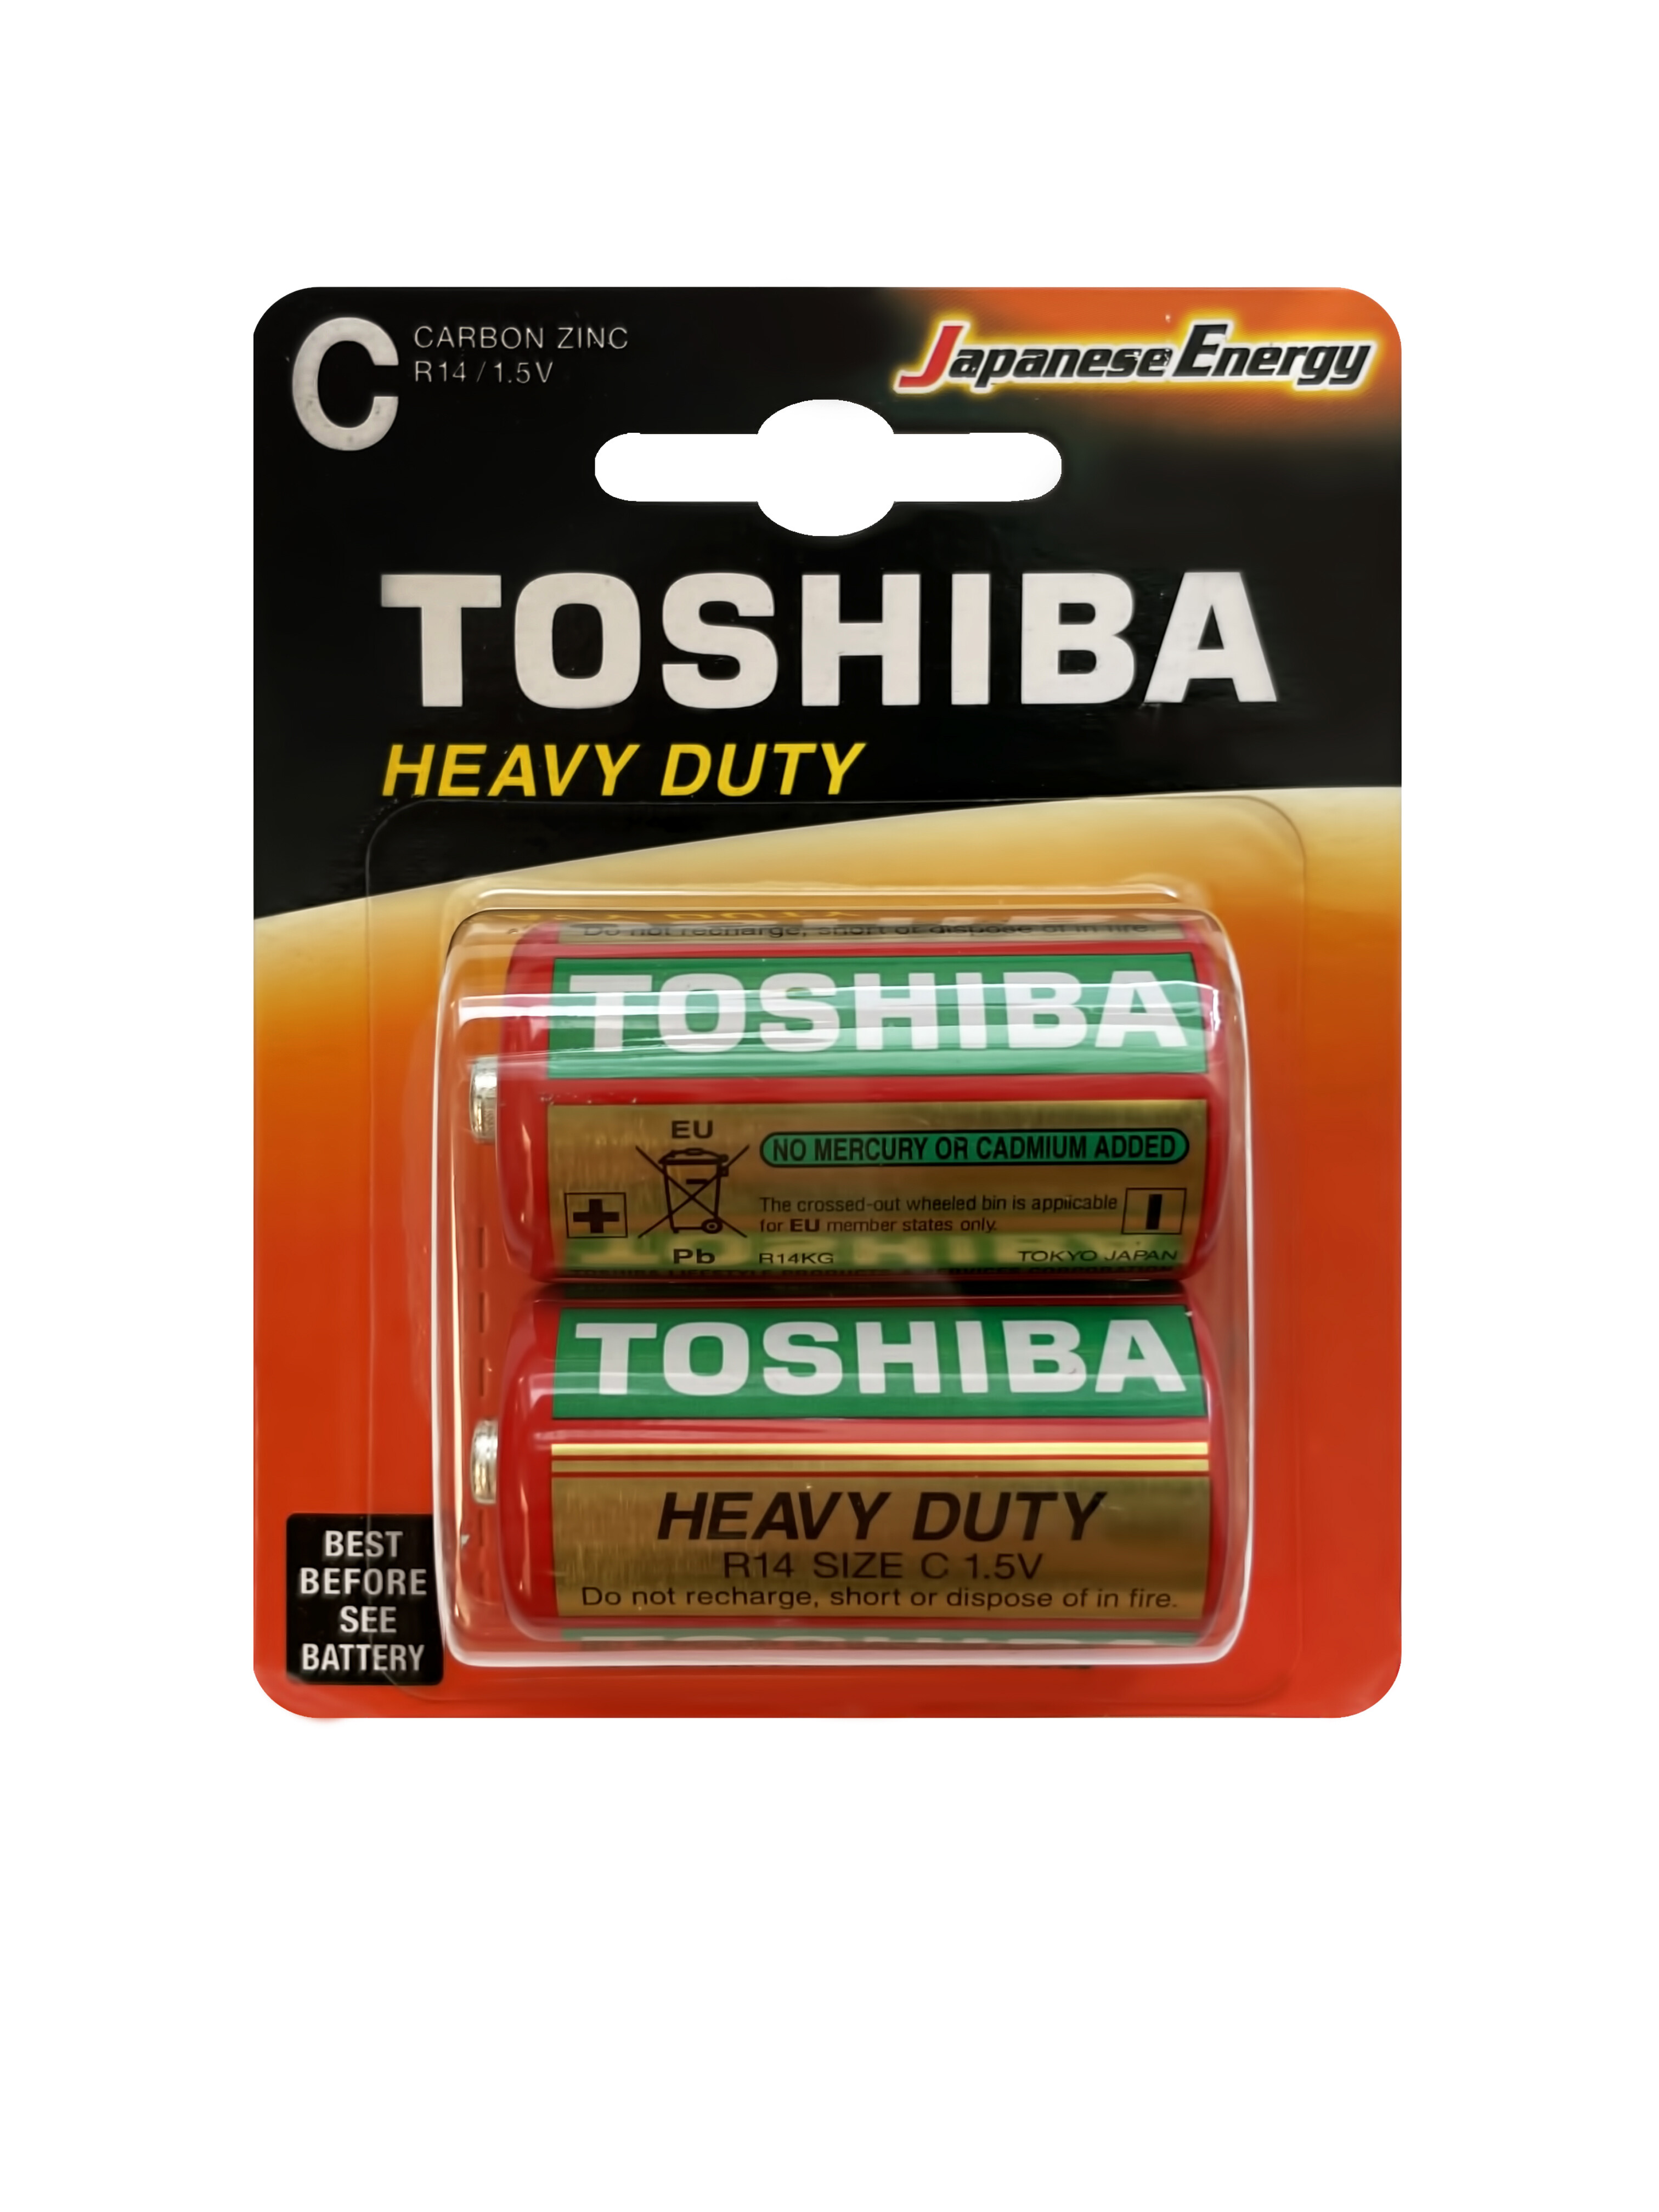 Батарейки Toshiba R14 солевые (zinc) ДЮЙМОВОЧКА Heavy Duty (2шт) C 1,5V